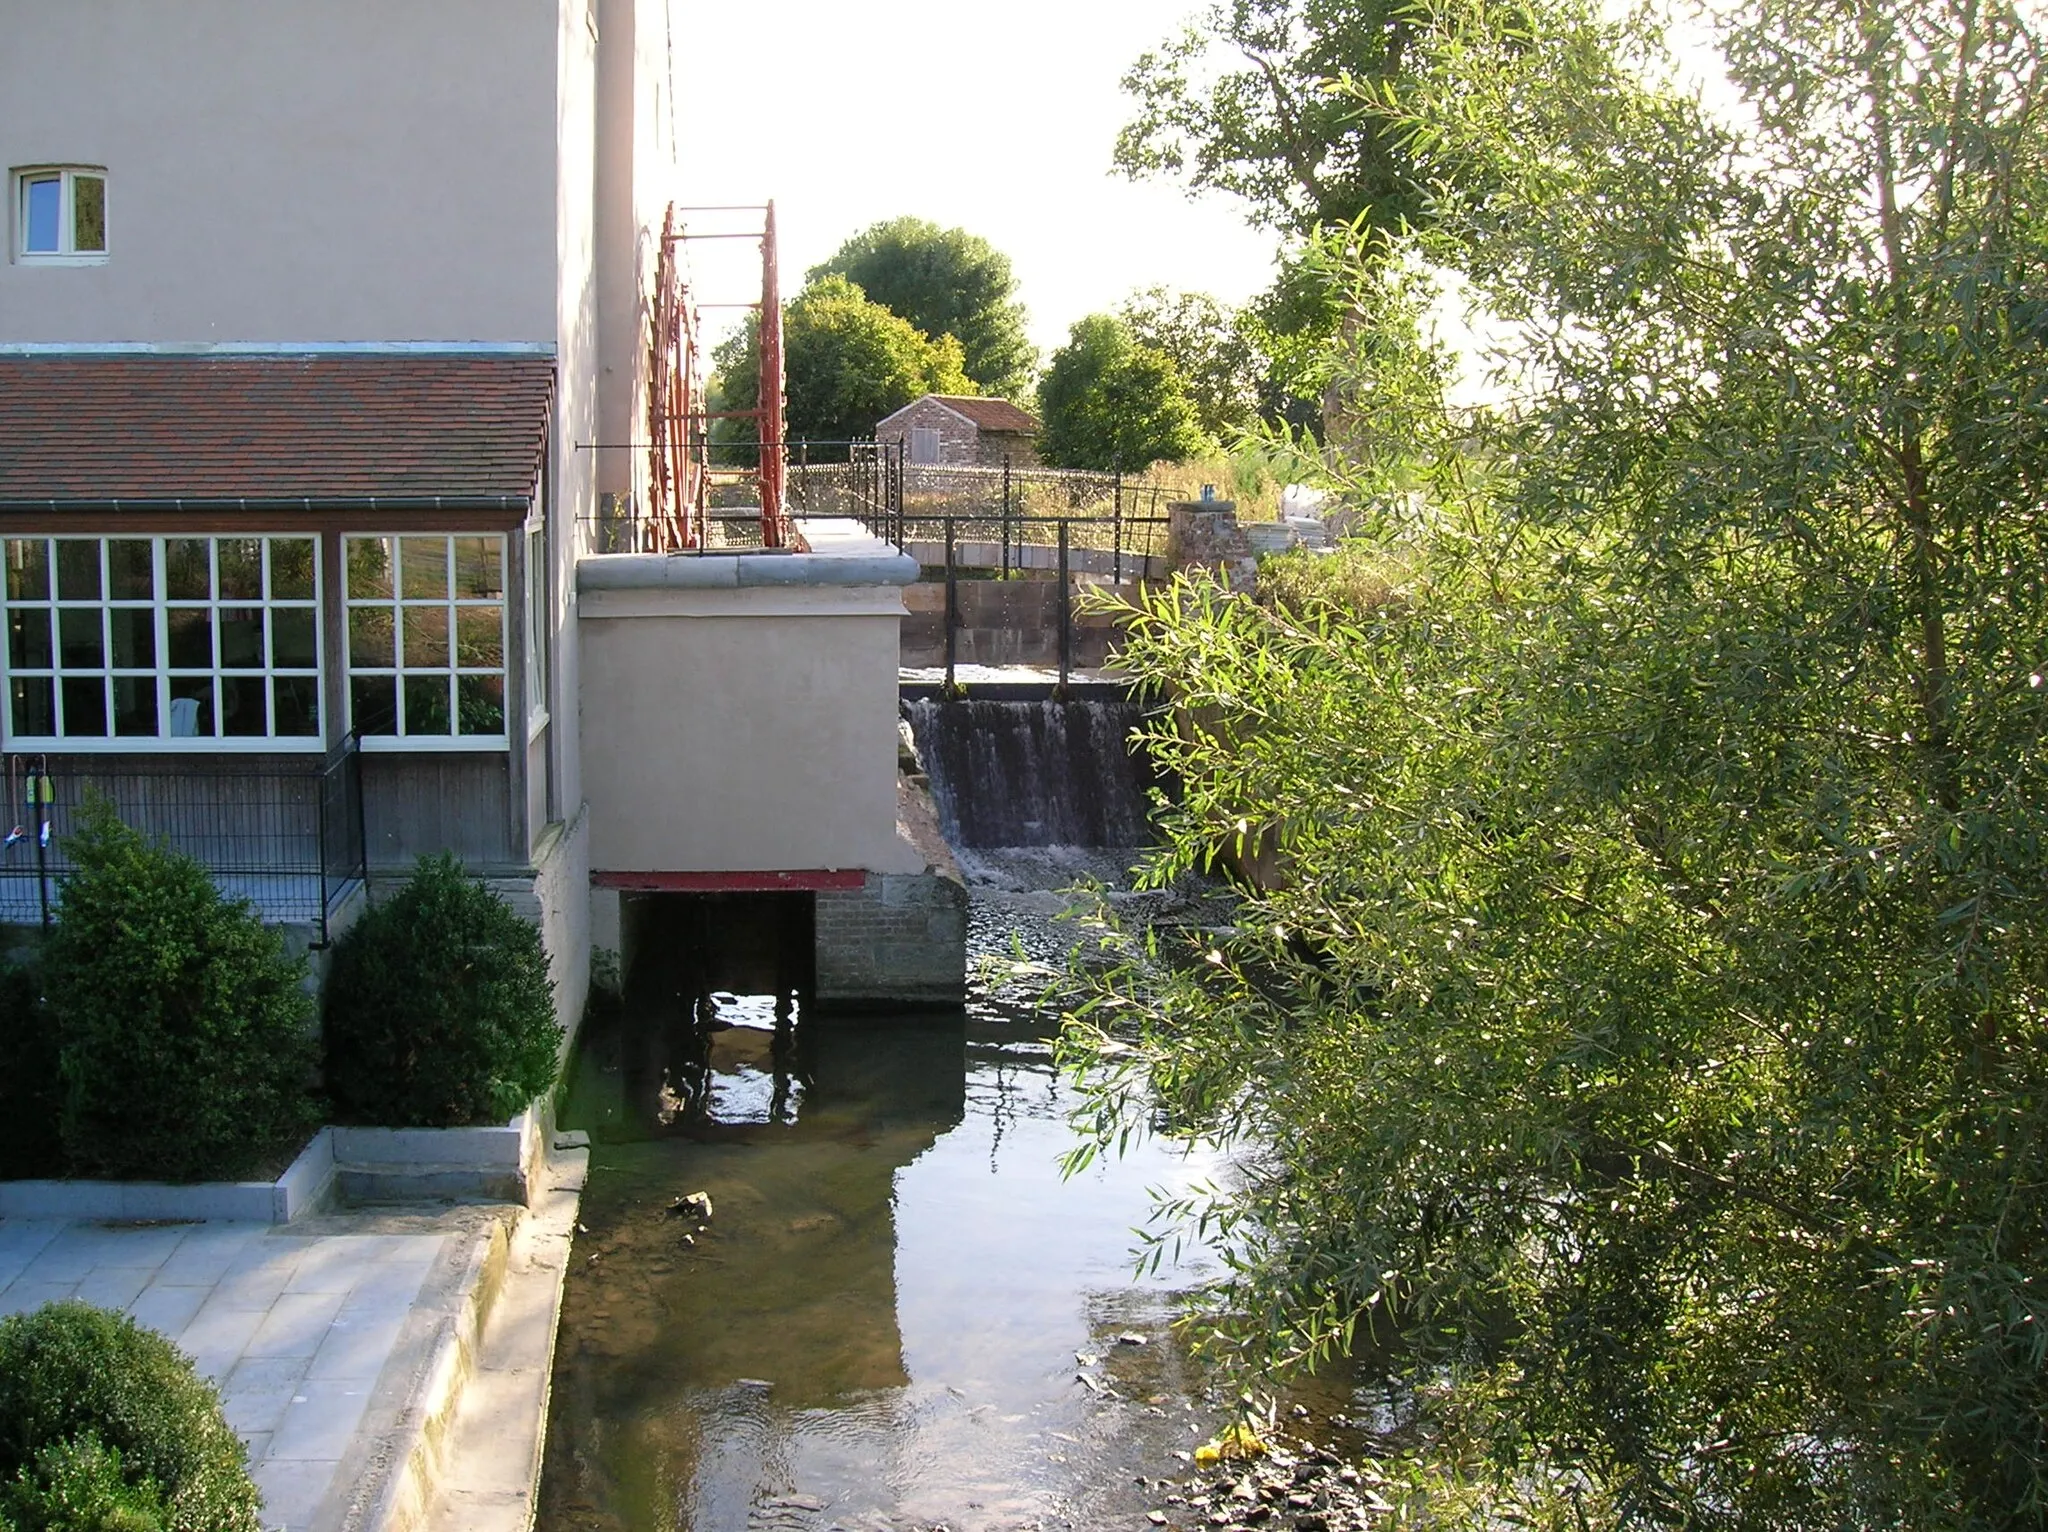 Photo showing: The "Molen van Pamelen" (Mill of Pamelen) or "Rotelmolen" water mill on the little river Velp or Velpe near Bunsbeek, Belgium.